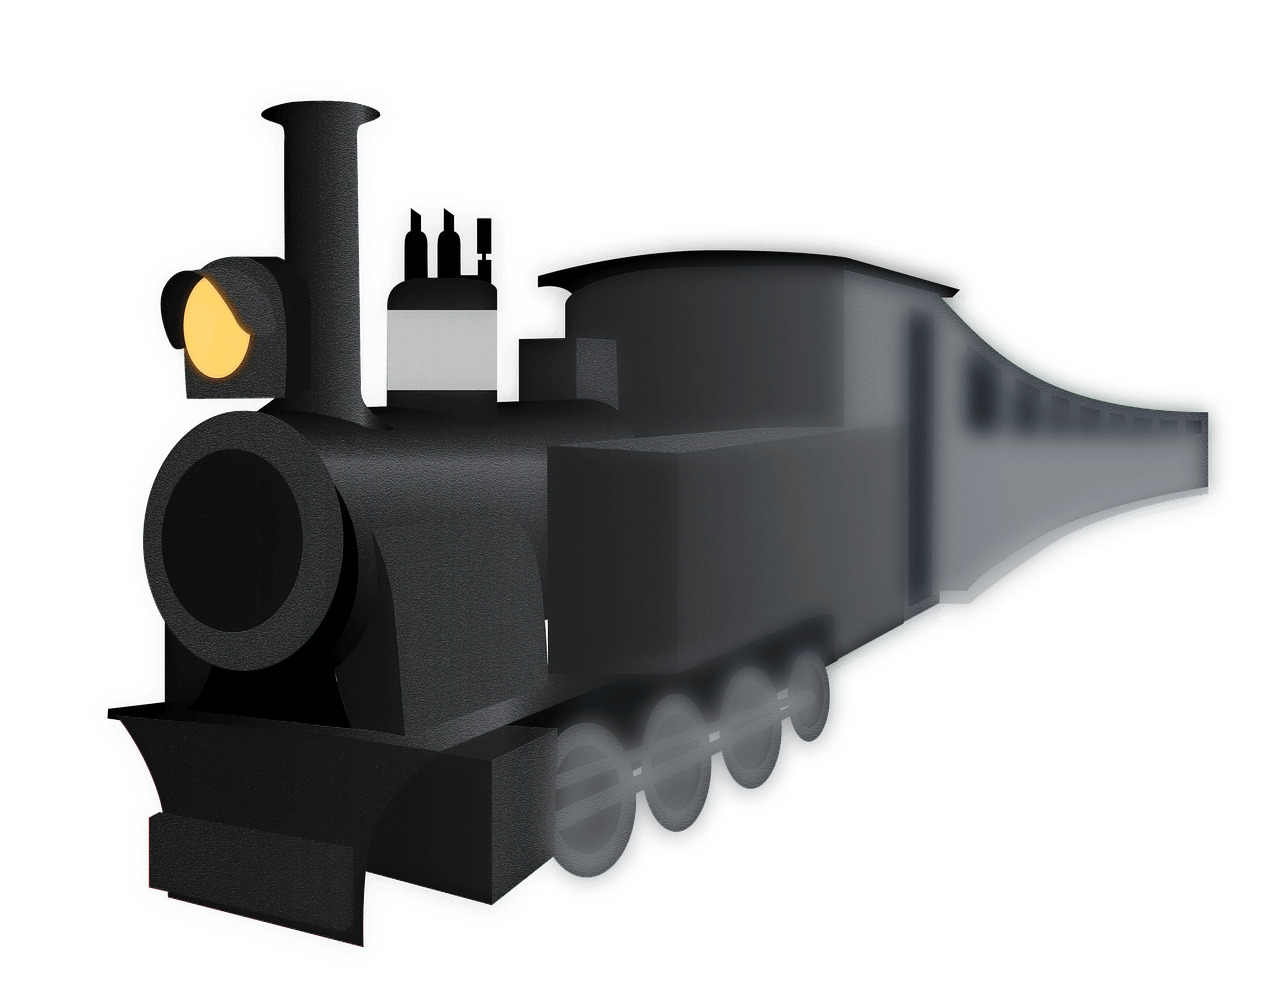 Black Train Clipart icons